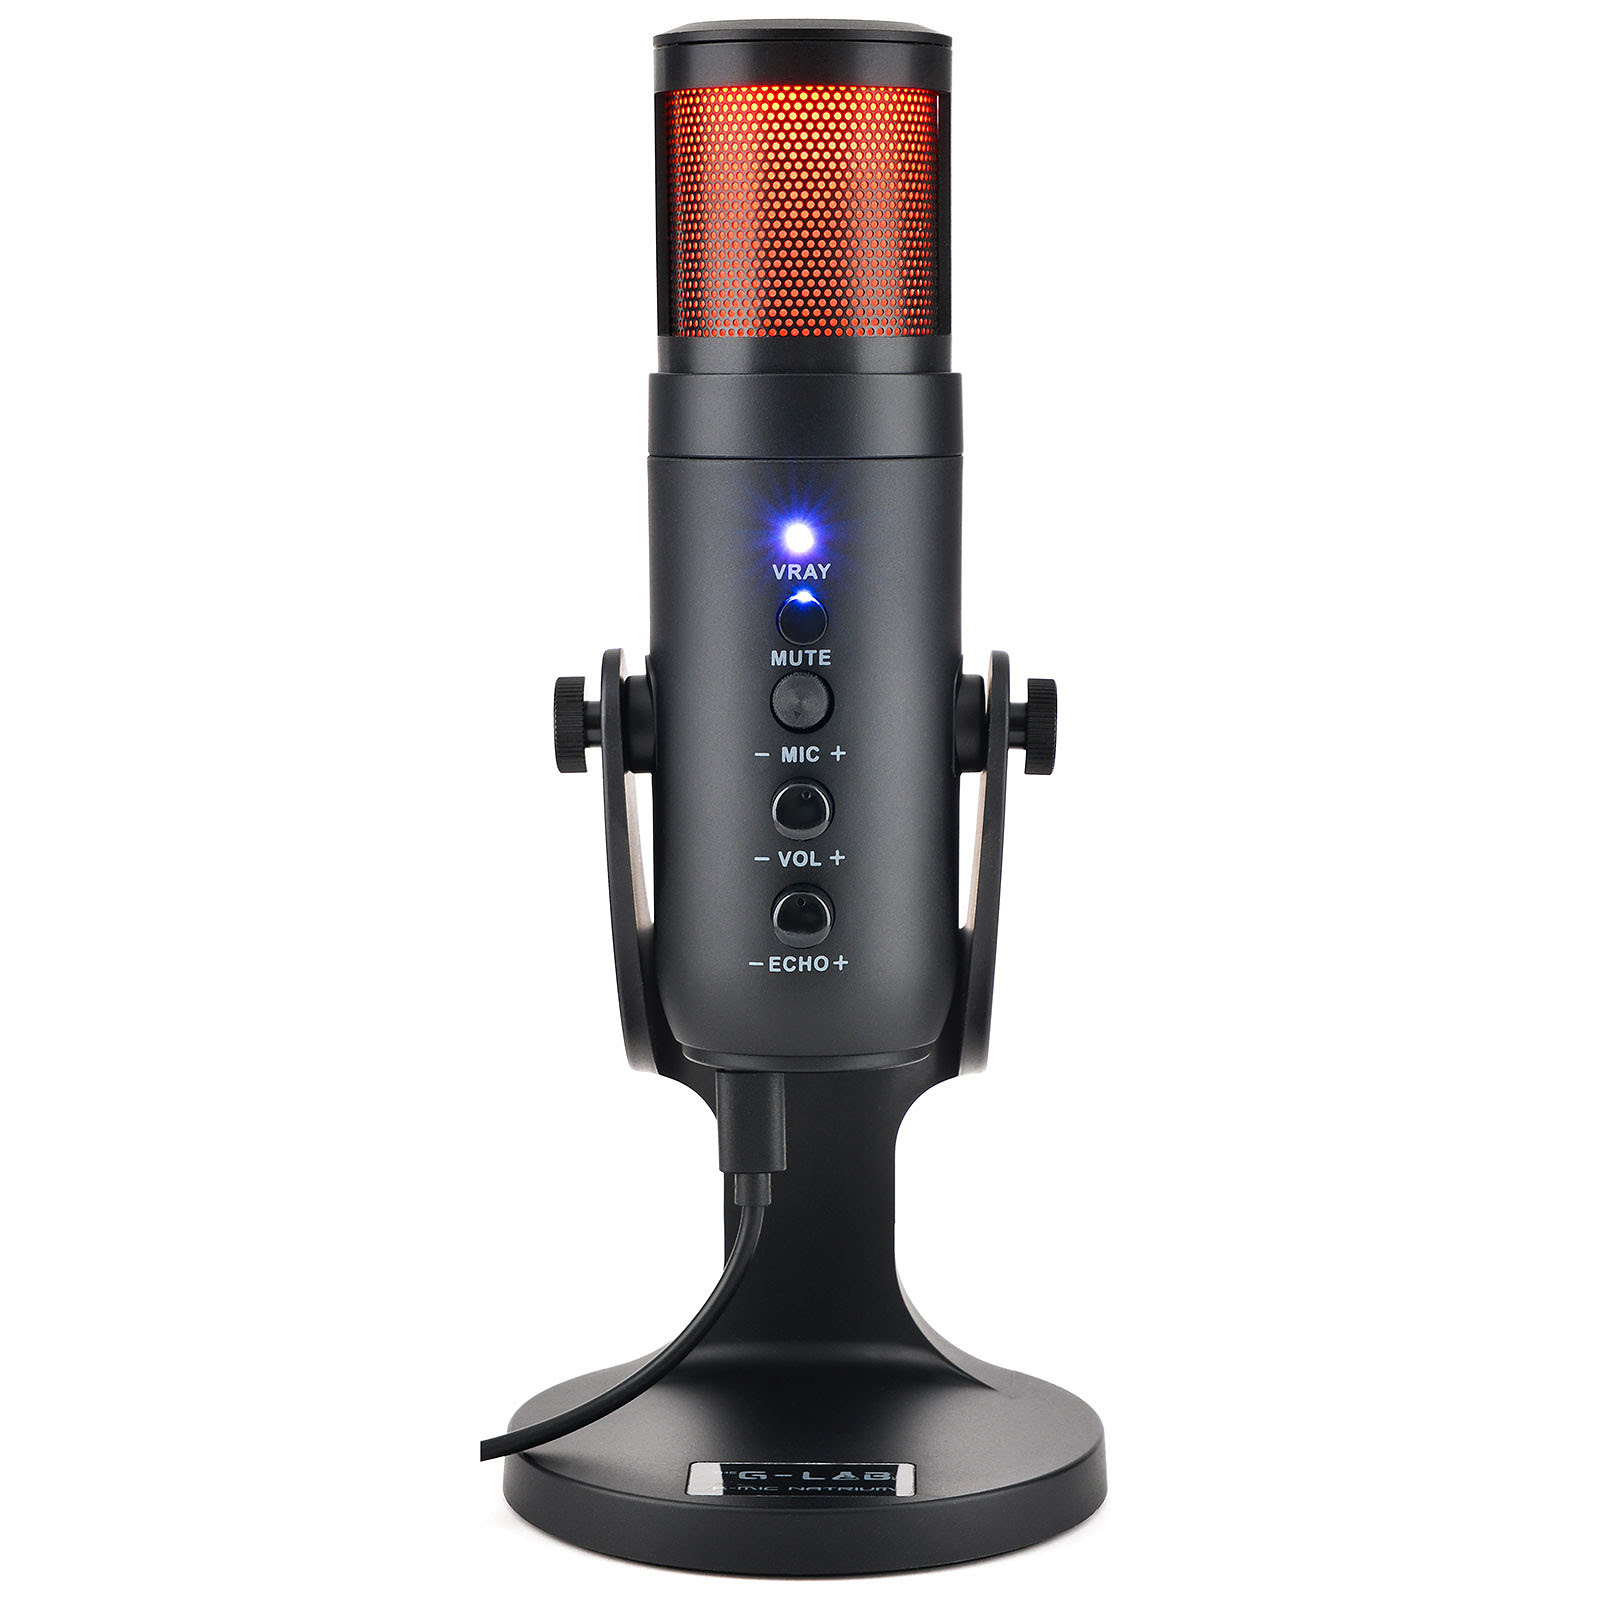 The G-LAB Microphone RGB - K-MIC-NATRIUM (K-MIC-NATRIUM) - Achat / Vente Accessoire Streaming / Vlogging  sur grosbill-pro.com - 1